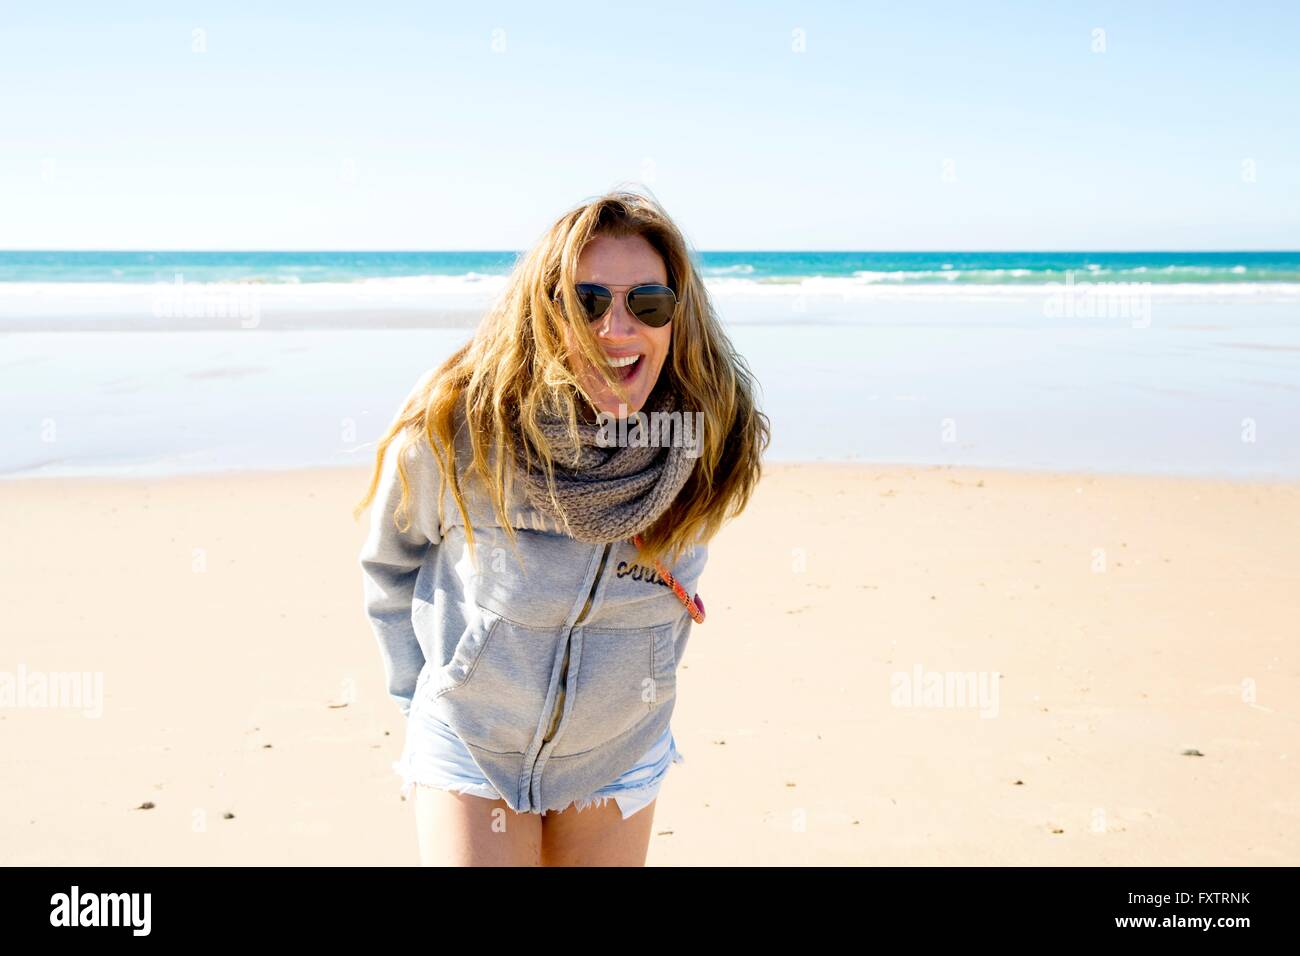 Portrait of mature woman with long blond hair on beach, Conil de la Frontera, Spain Stock Photo